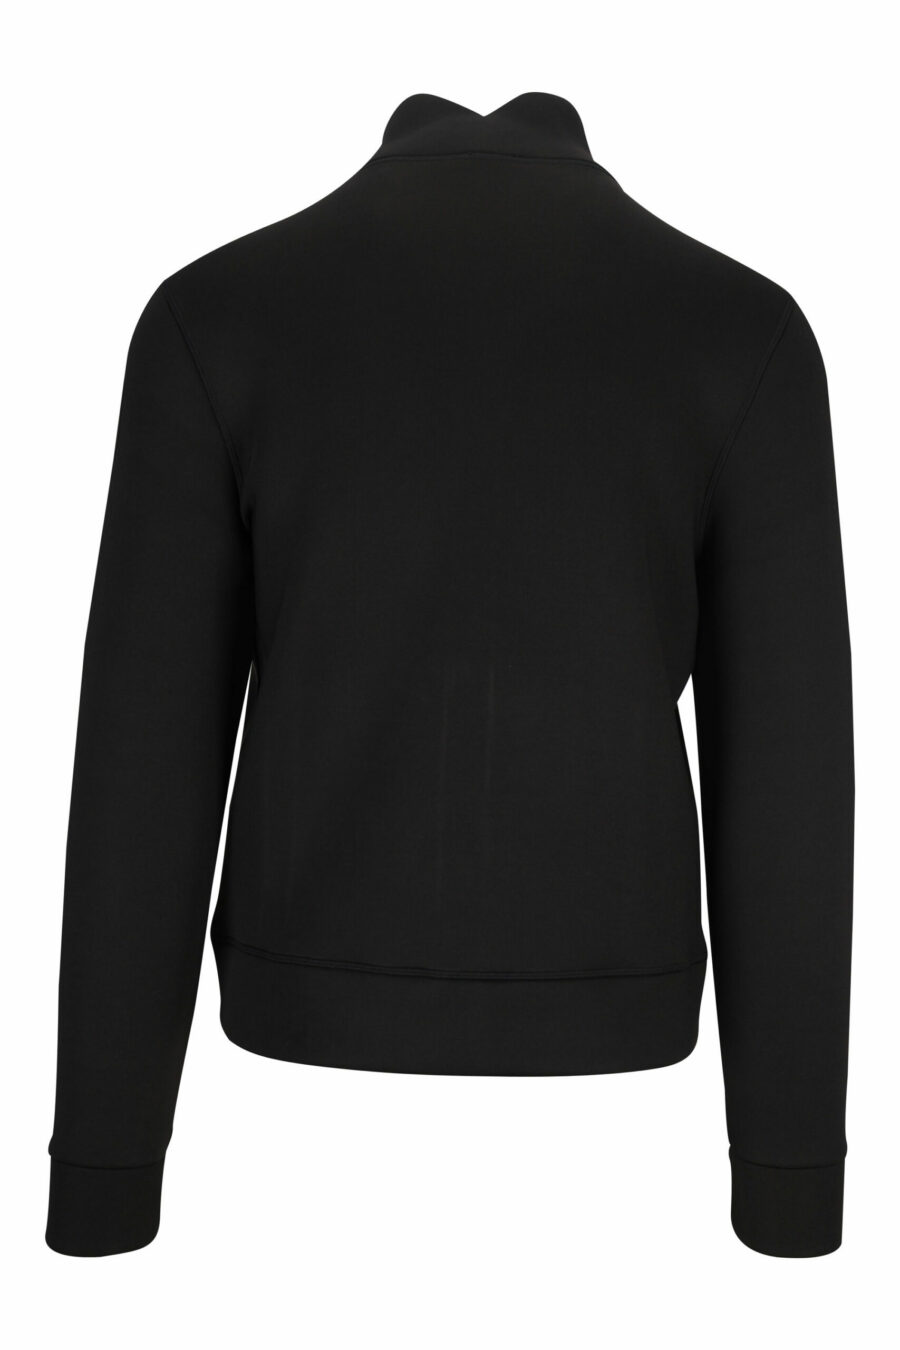 Black zip-up sweatshirt with monochrome logo patch - 8058610660024 2 scaled